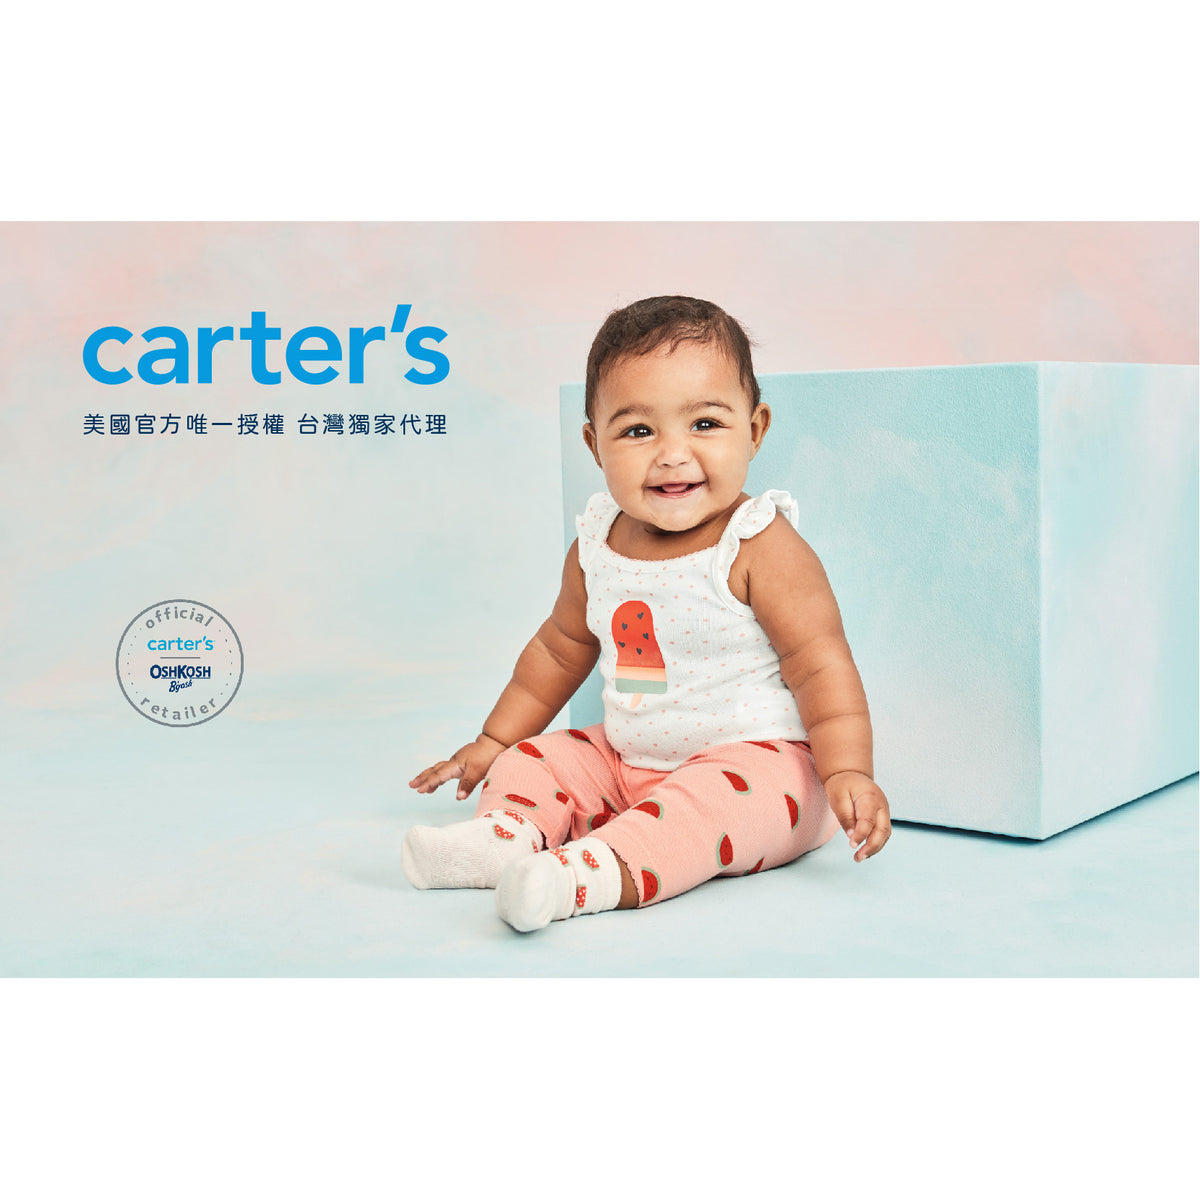 Carter's 可愛盆栽蝴蝶2件組套裝(6M-24M)